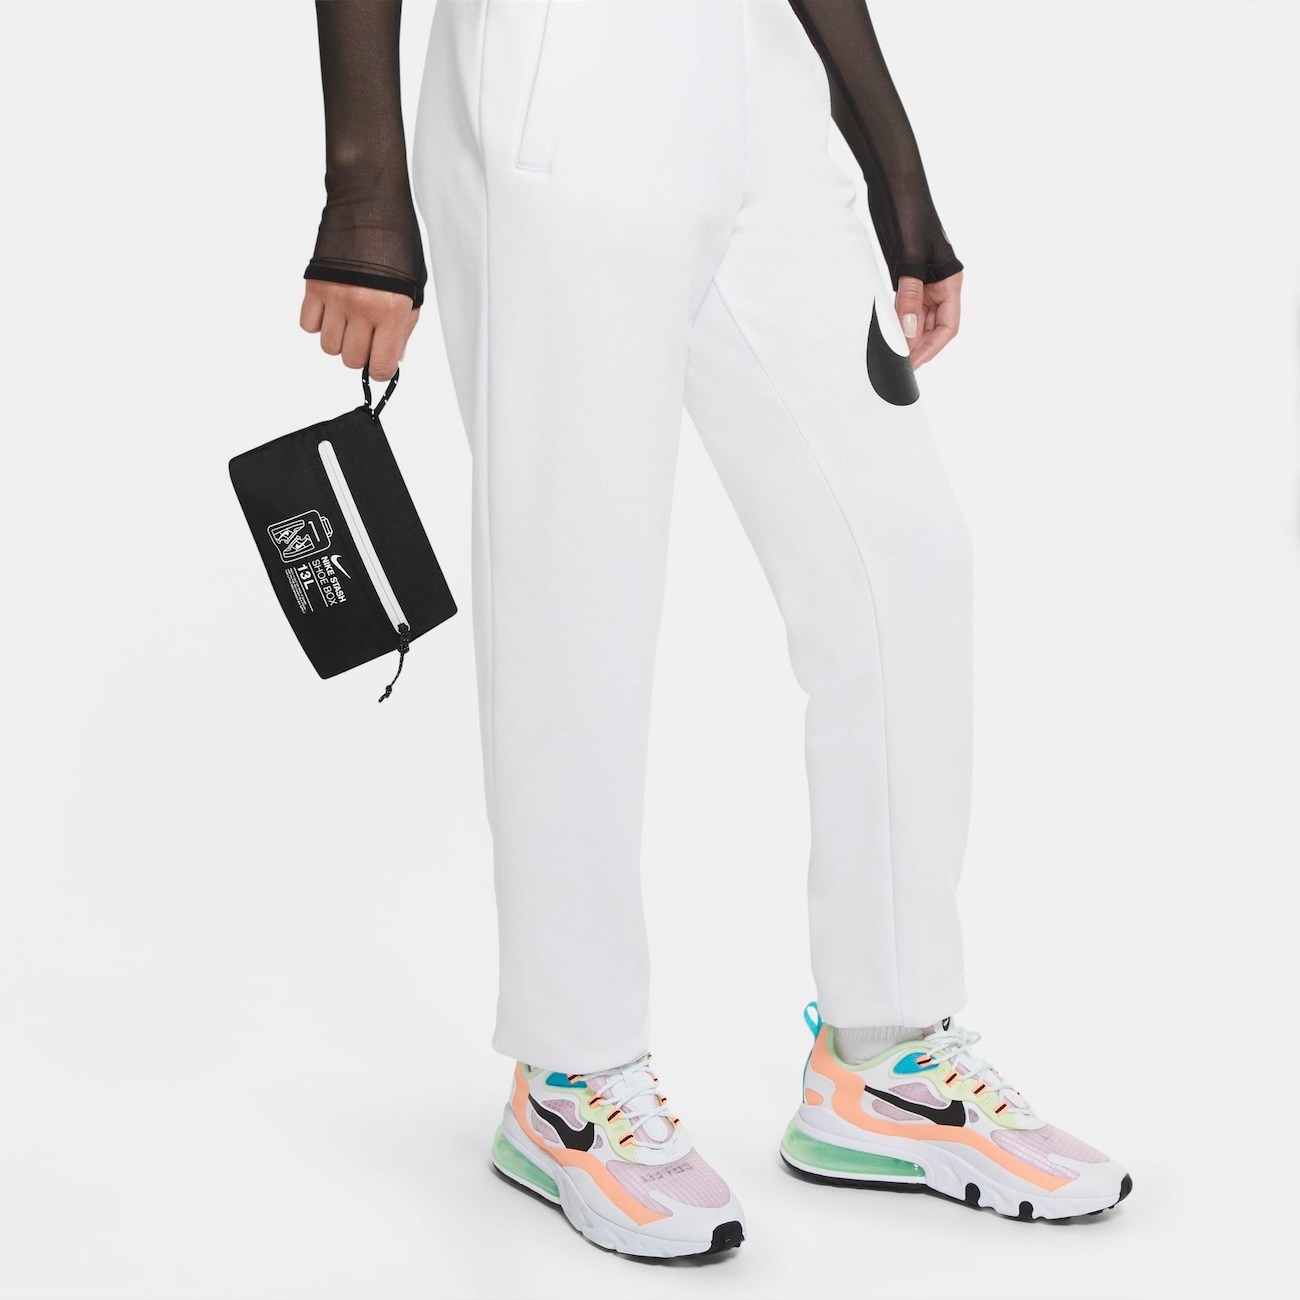 Bolsa Nike Shoe Bag Stash Masculina - Foto 2